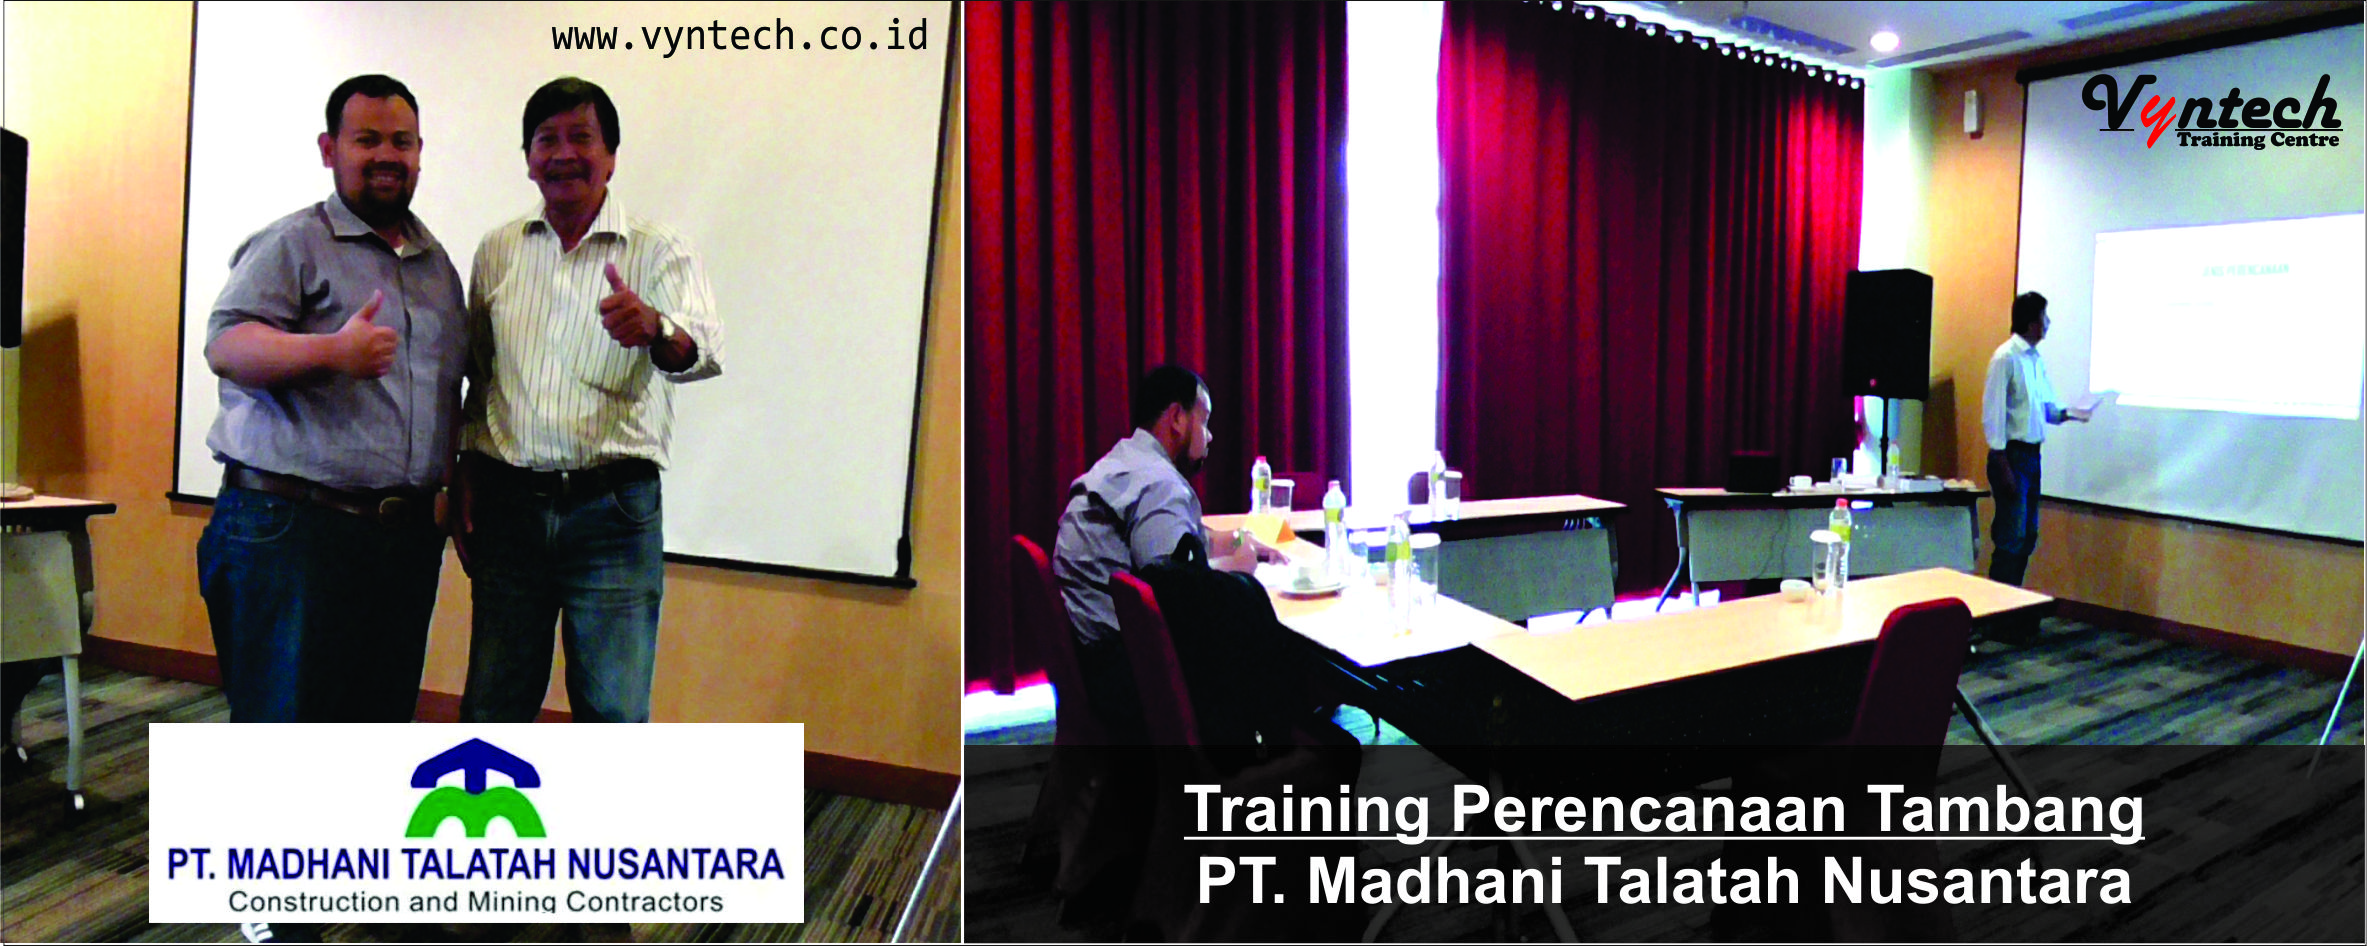 20180221 Training Perencanaan Tambang - PT. Madhani Talatah Nusantara, di Yogya